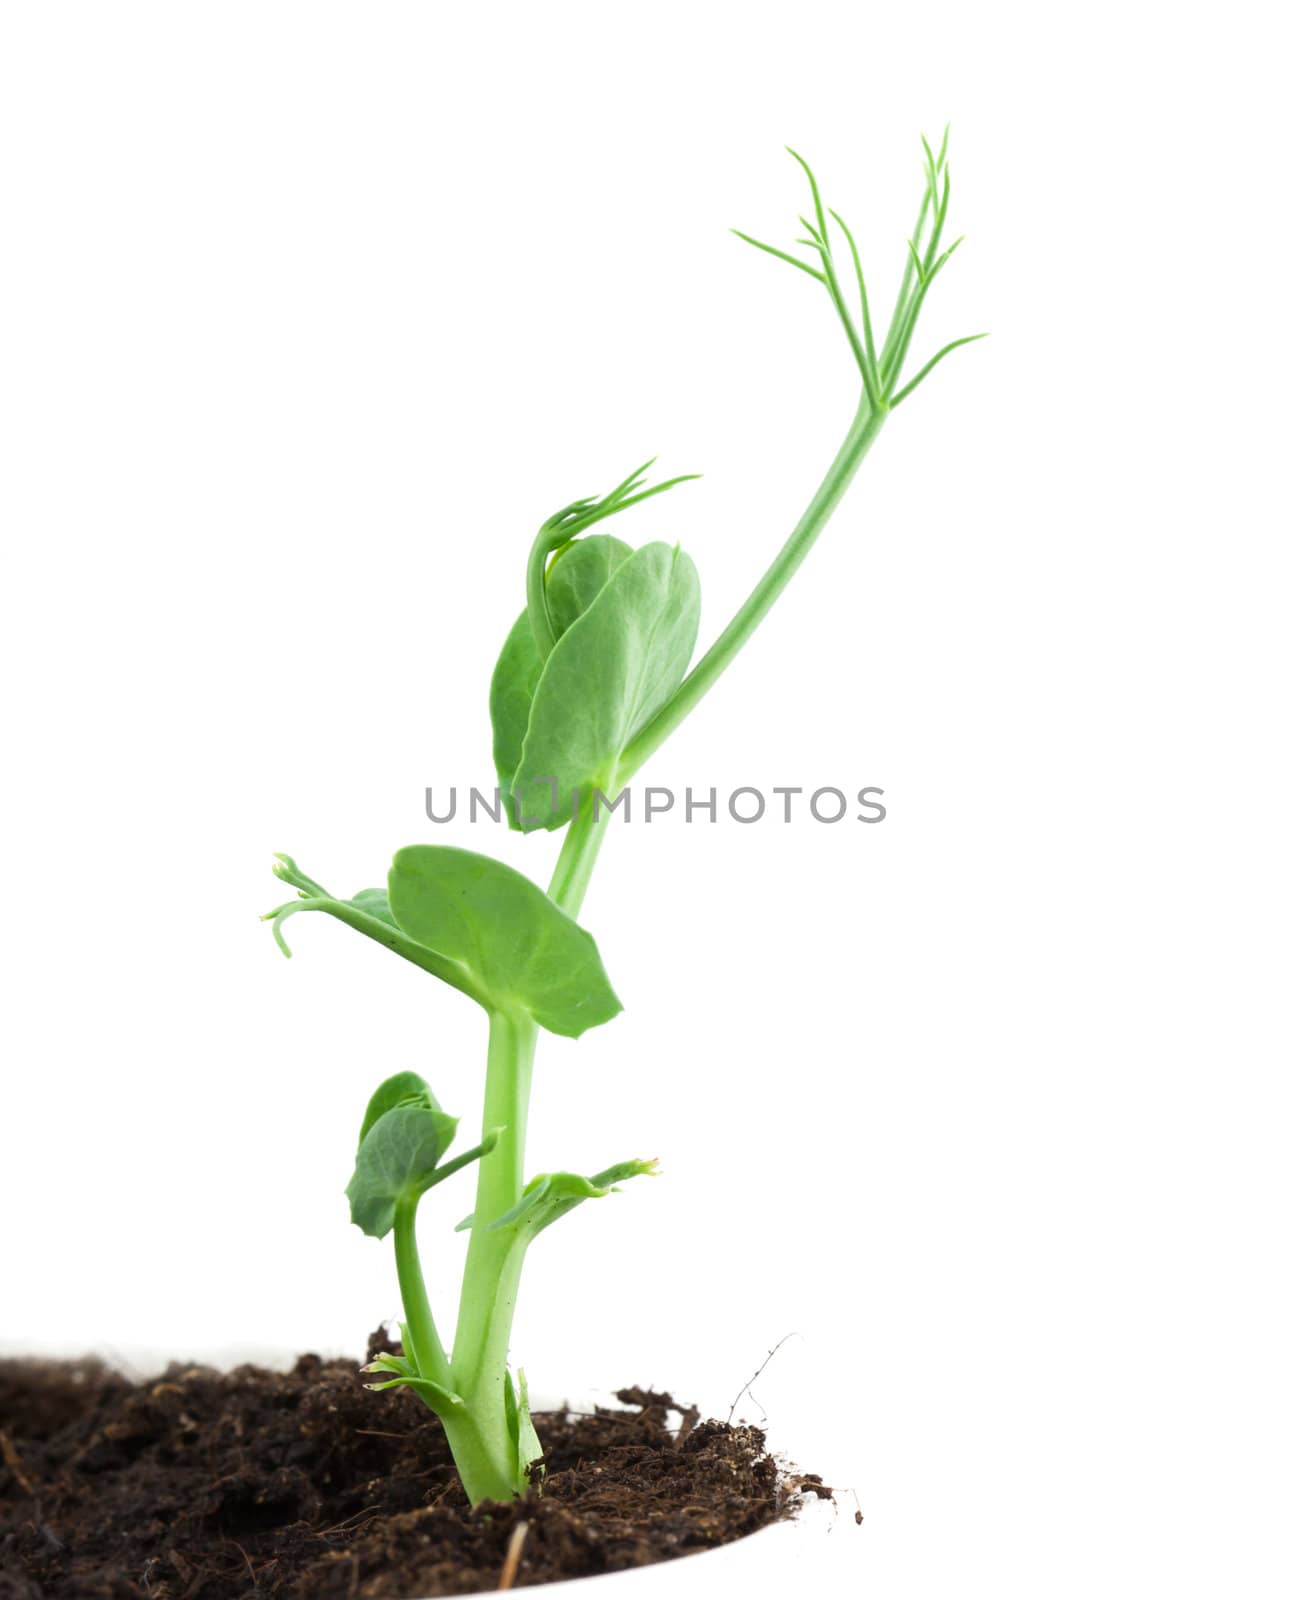 Small pea plant